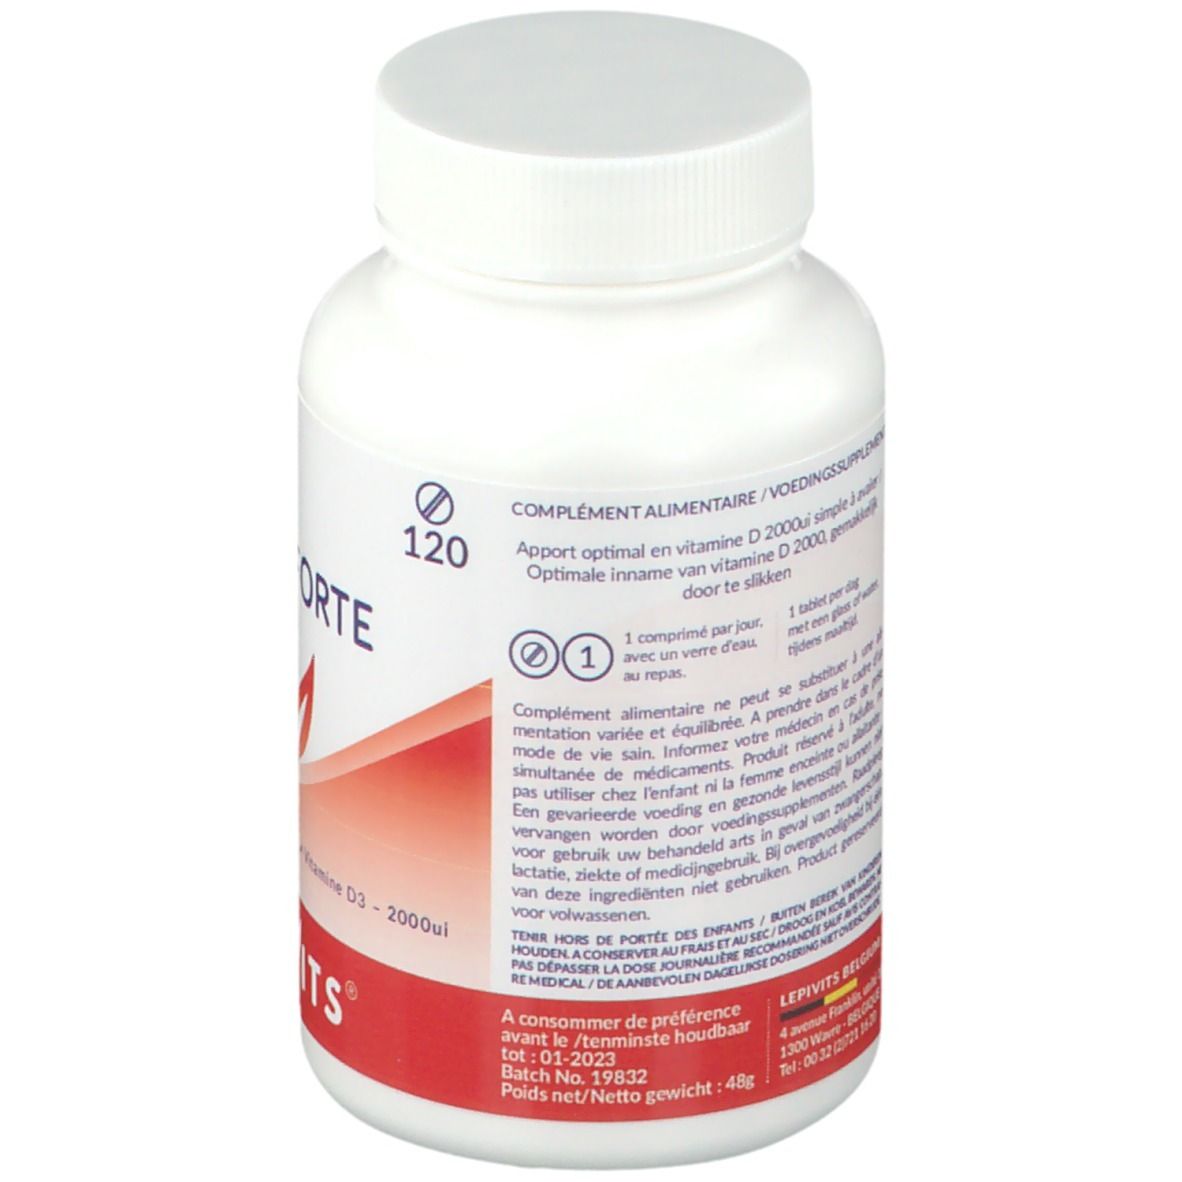 Lepivits® Vitamine D3 Forte